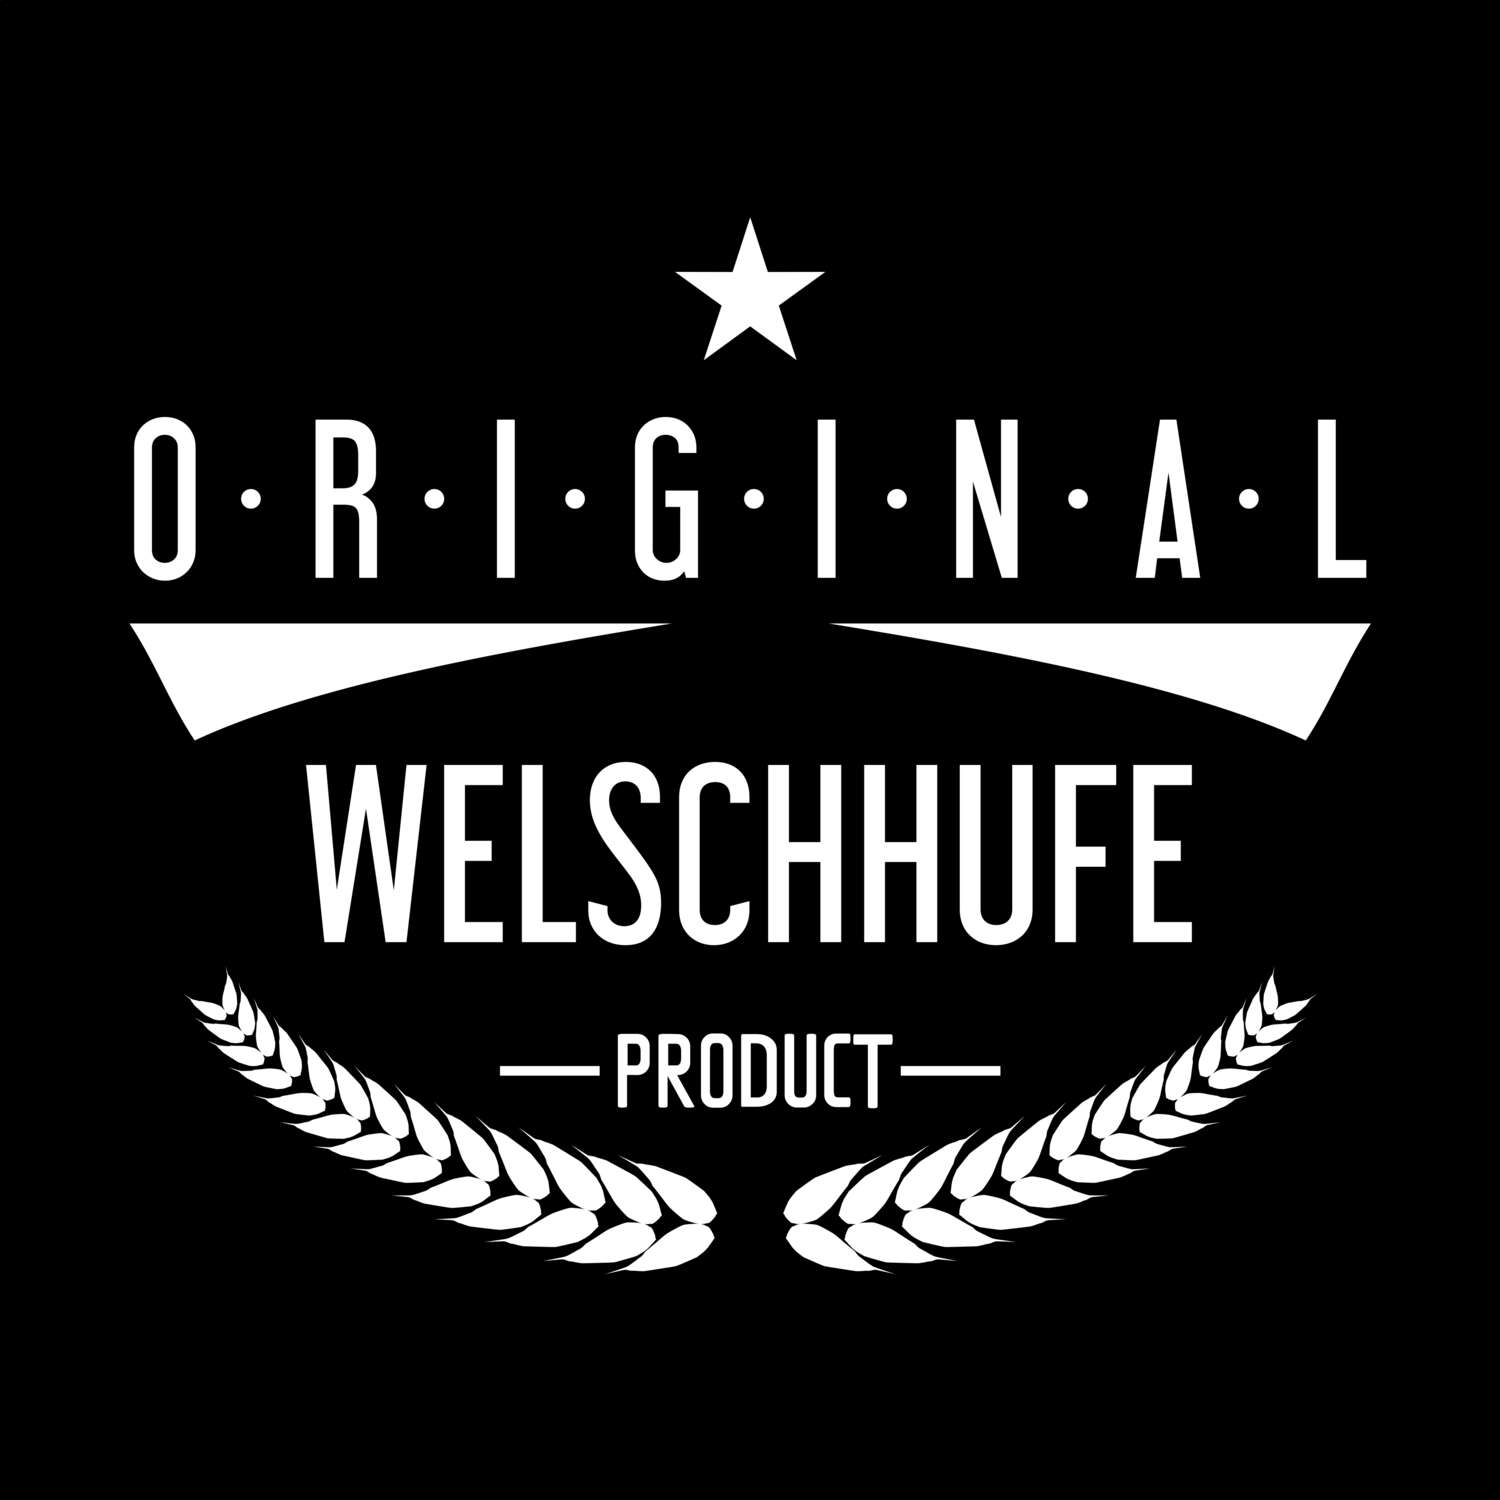 Welschhufe T-Shirt »Original Product«